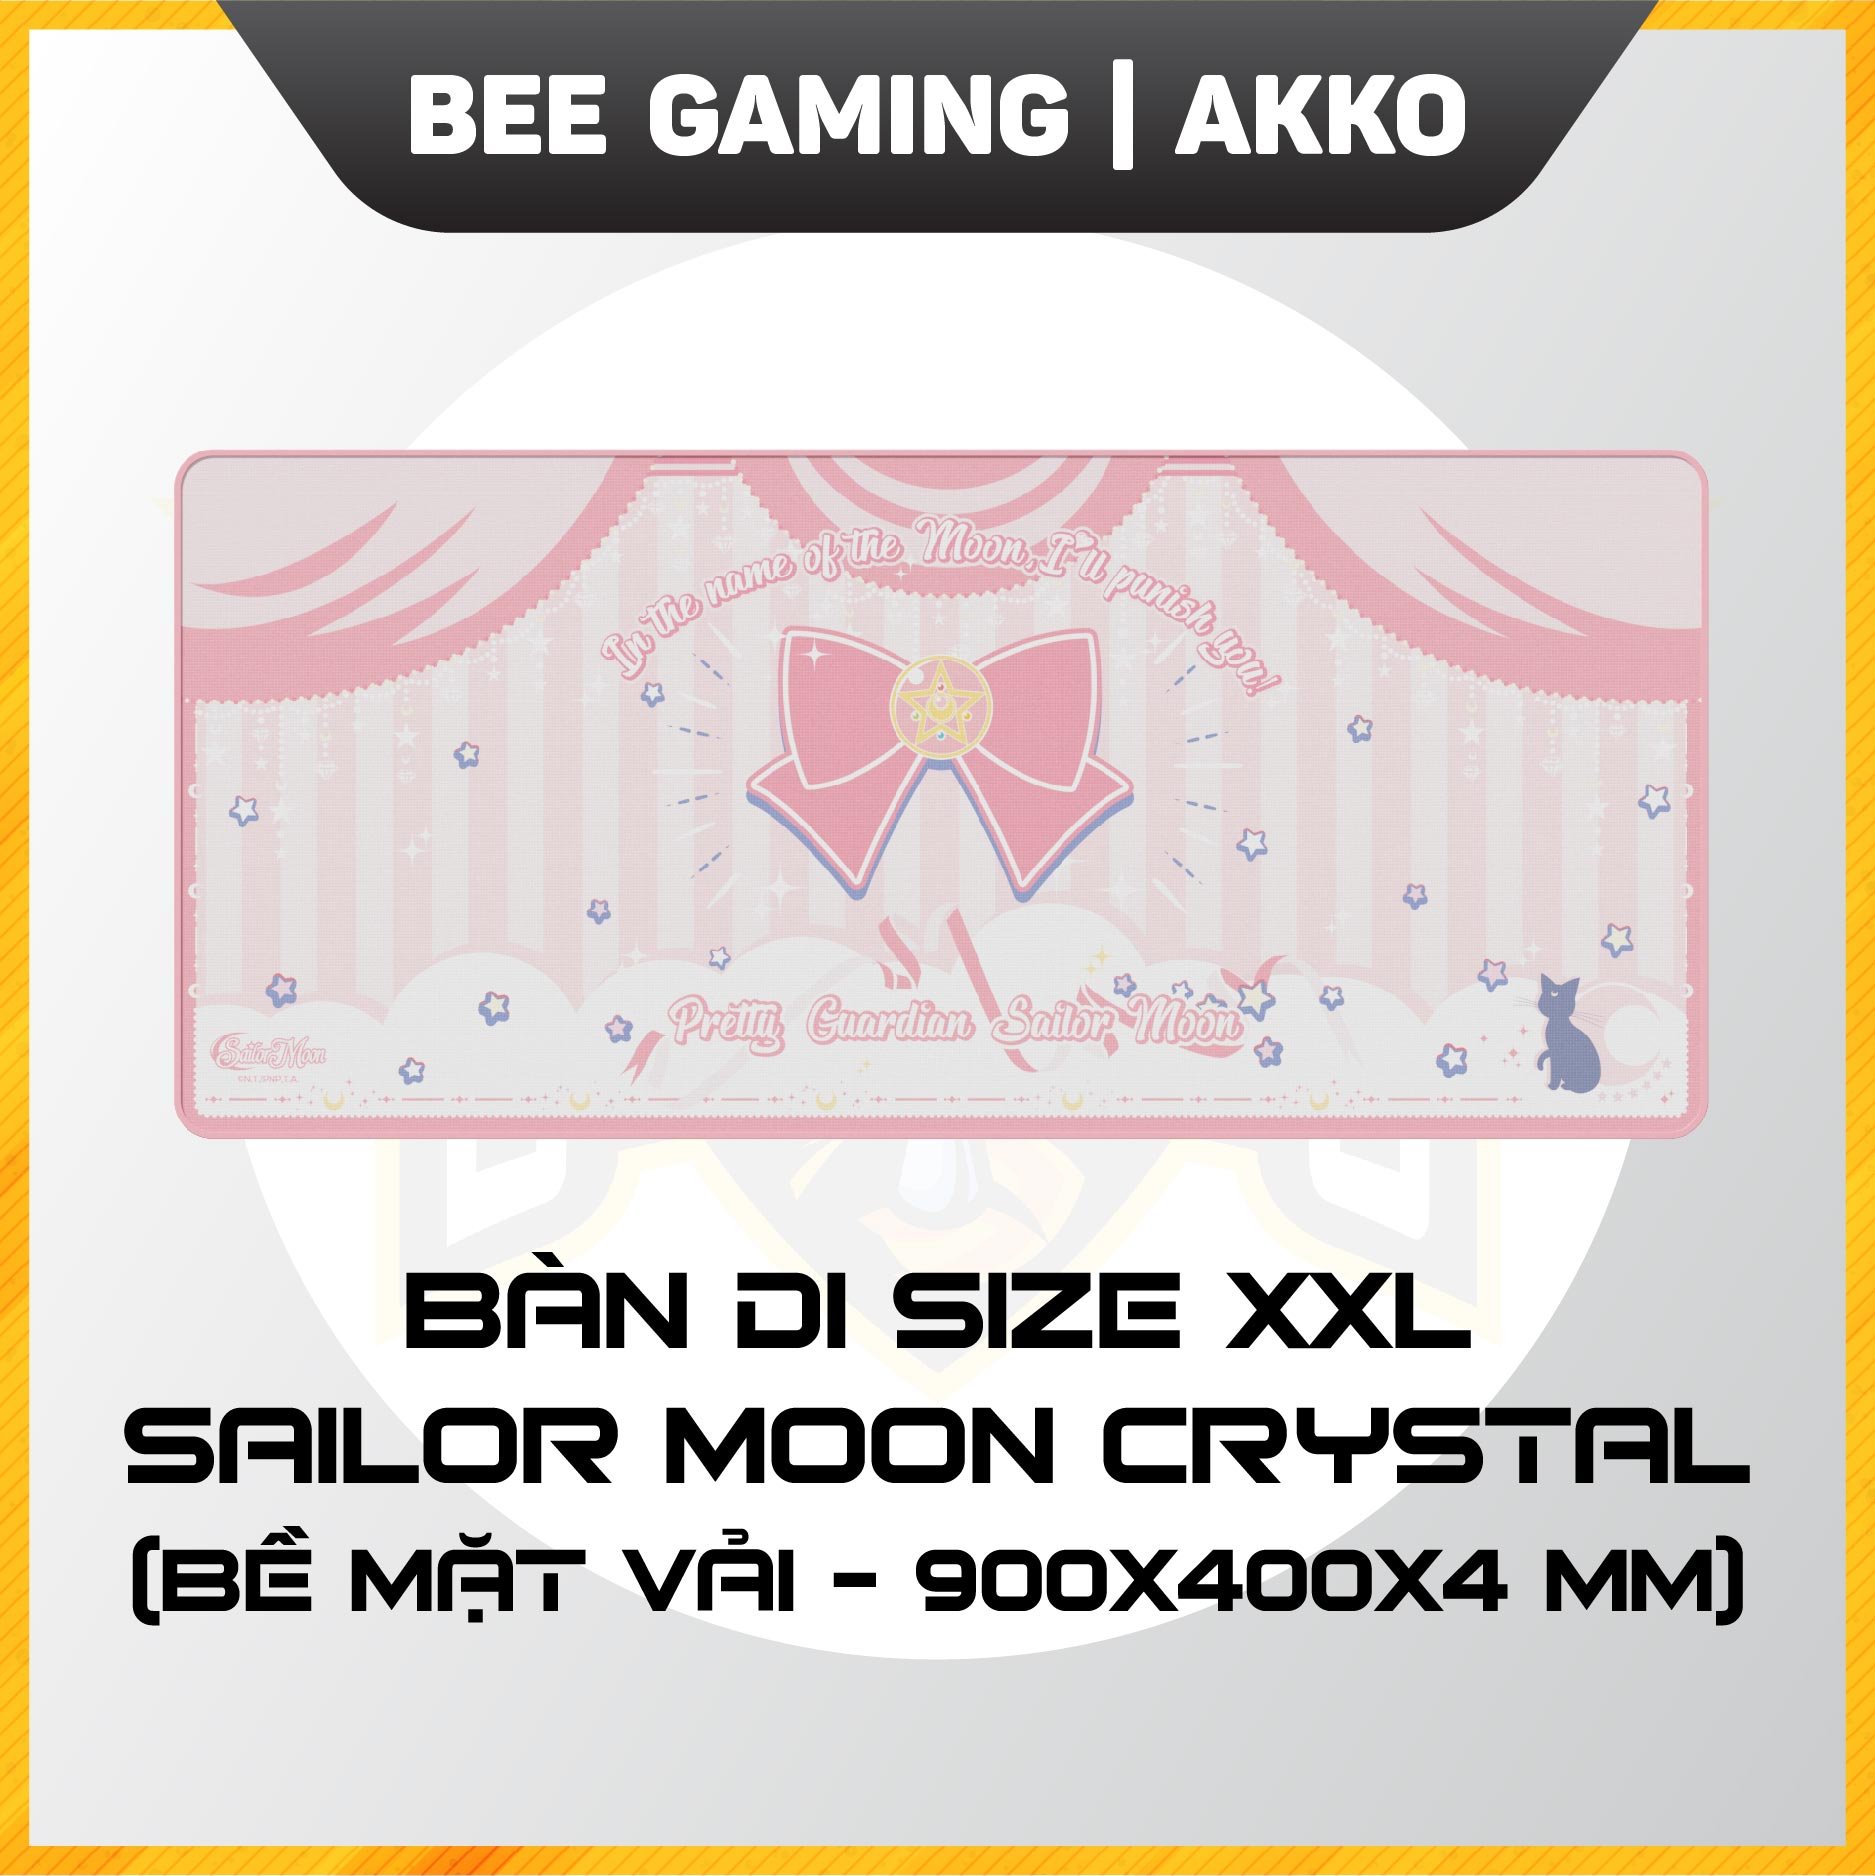 ban-di-akko-size-xxl-sailor-moon-crystal-900x400x4-mm-beegaming-1